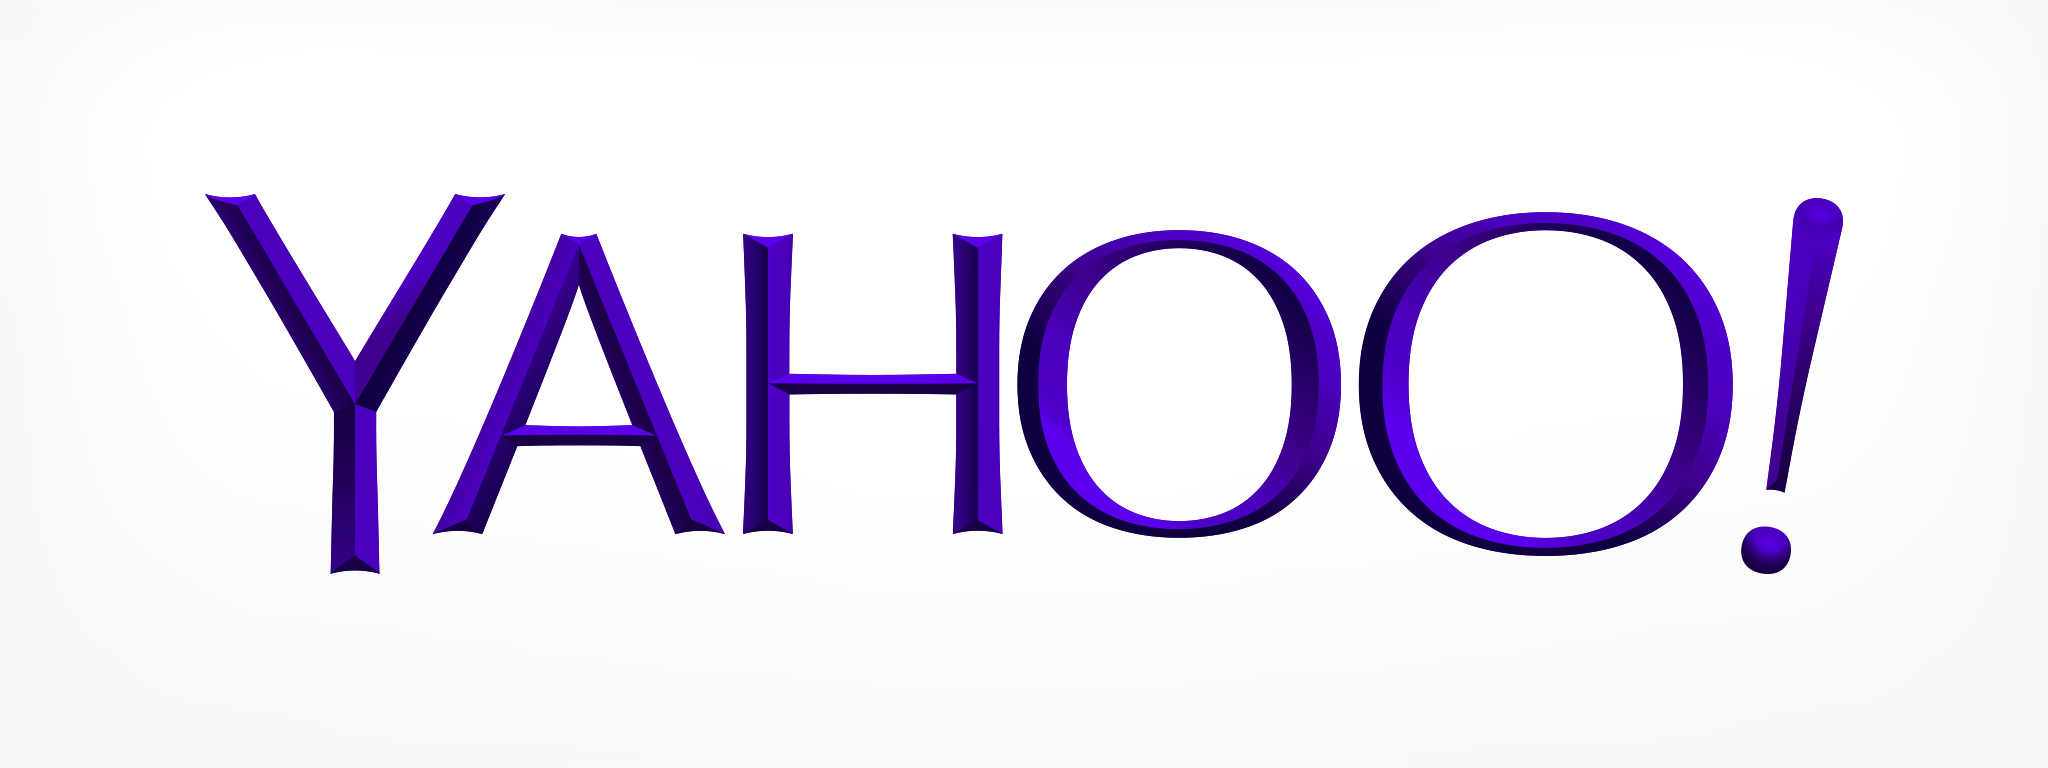 Results image of Yahoo logo